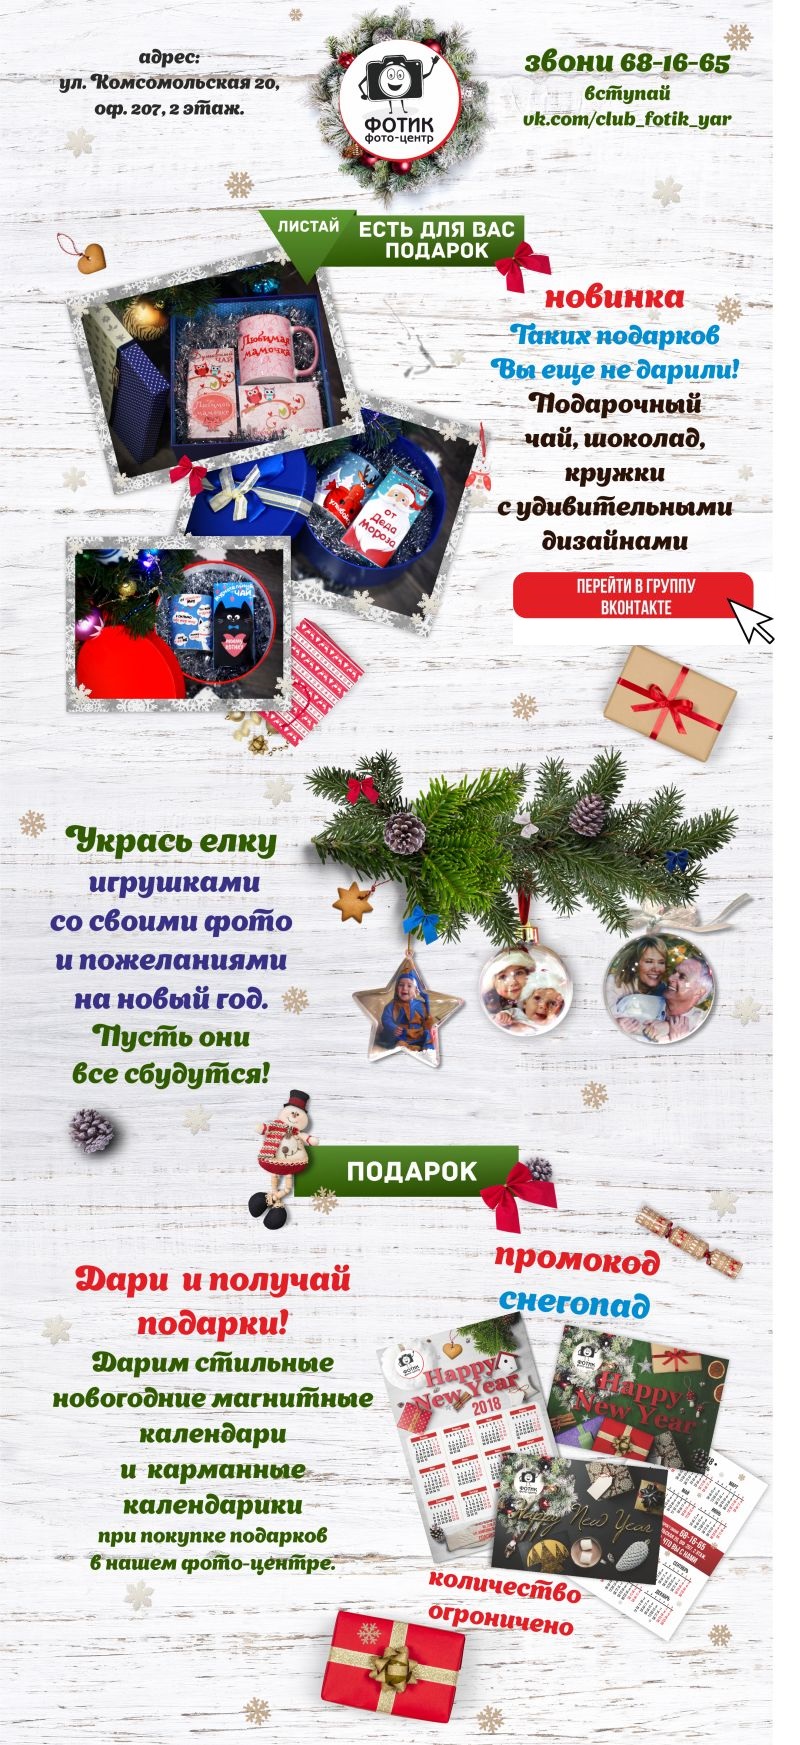 Новогодний маркетинг во ВКонтакте